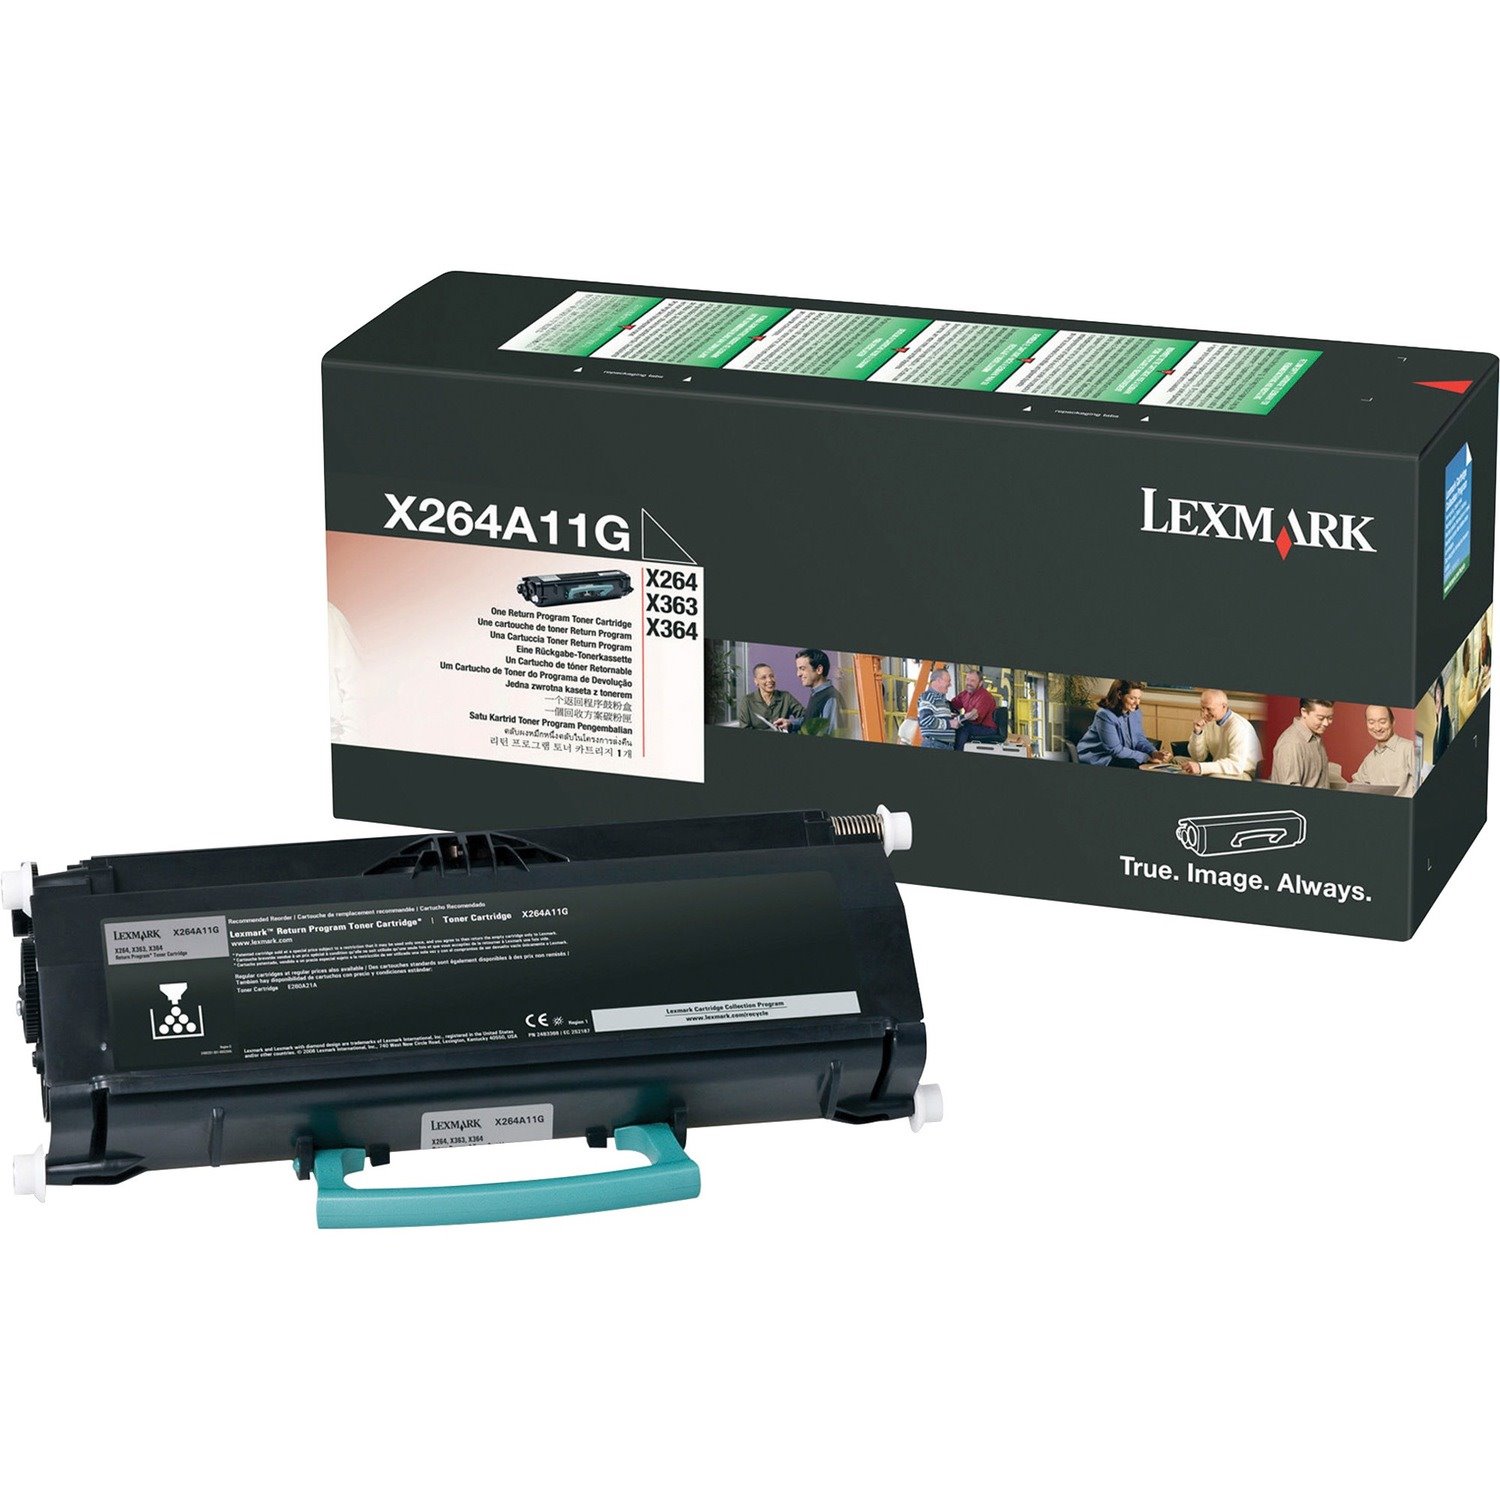 Lexmark X264A11G Original Laser Toner Cartridge - Black Pack